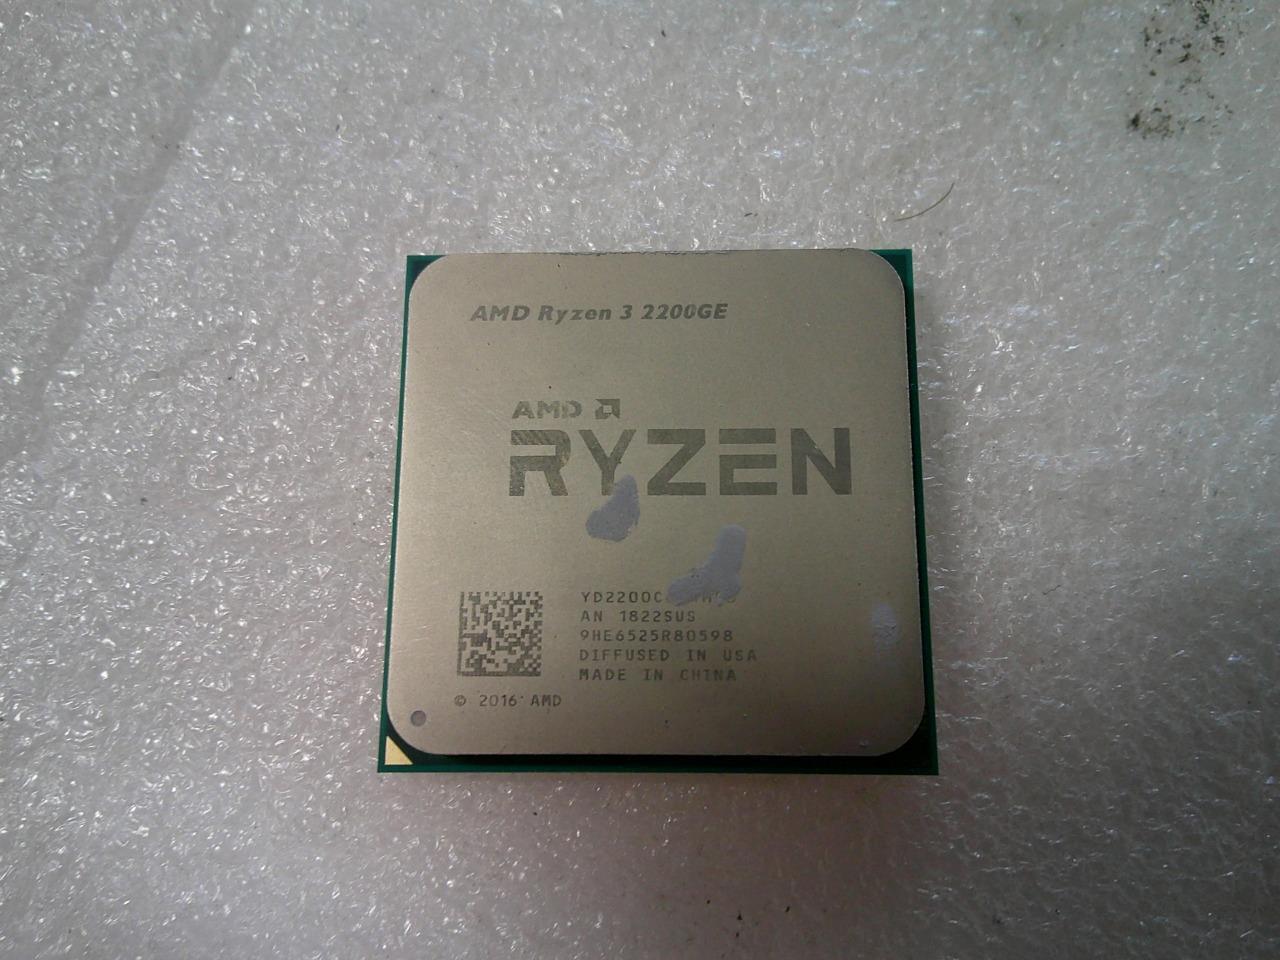 AMD RYZEN 3 PRO 2200GE 4-CORE 3.2GHz SOCKET AM4 35W CPU PROCESSOR (C3749)